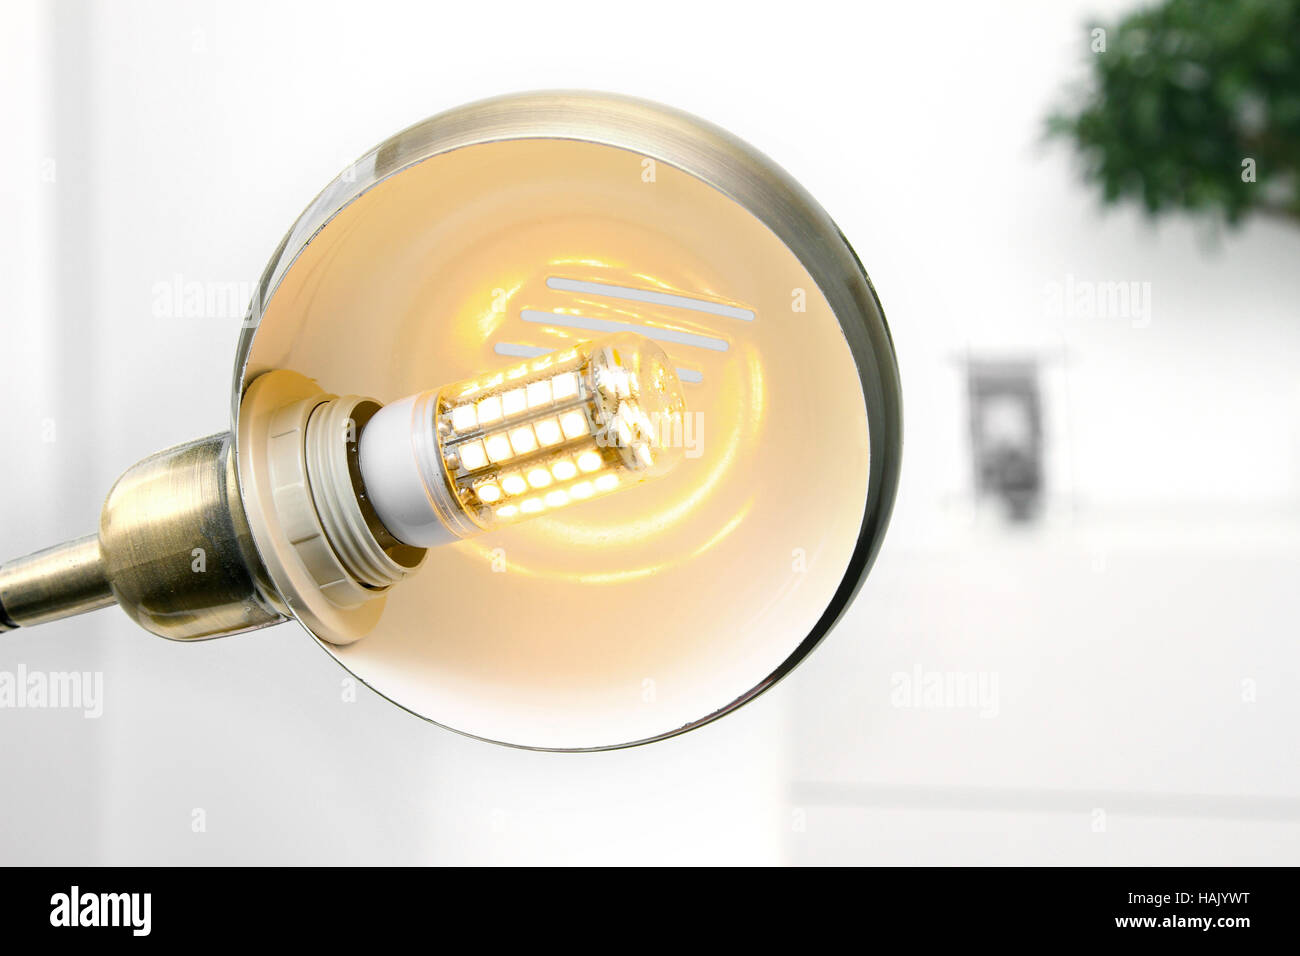 lamp with led light bulb Stock Photo